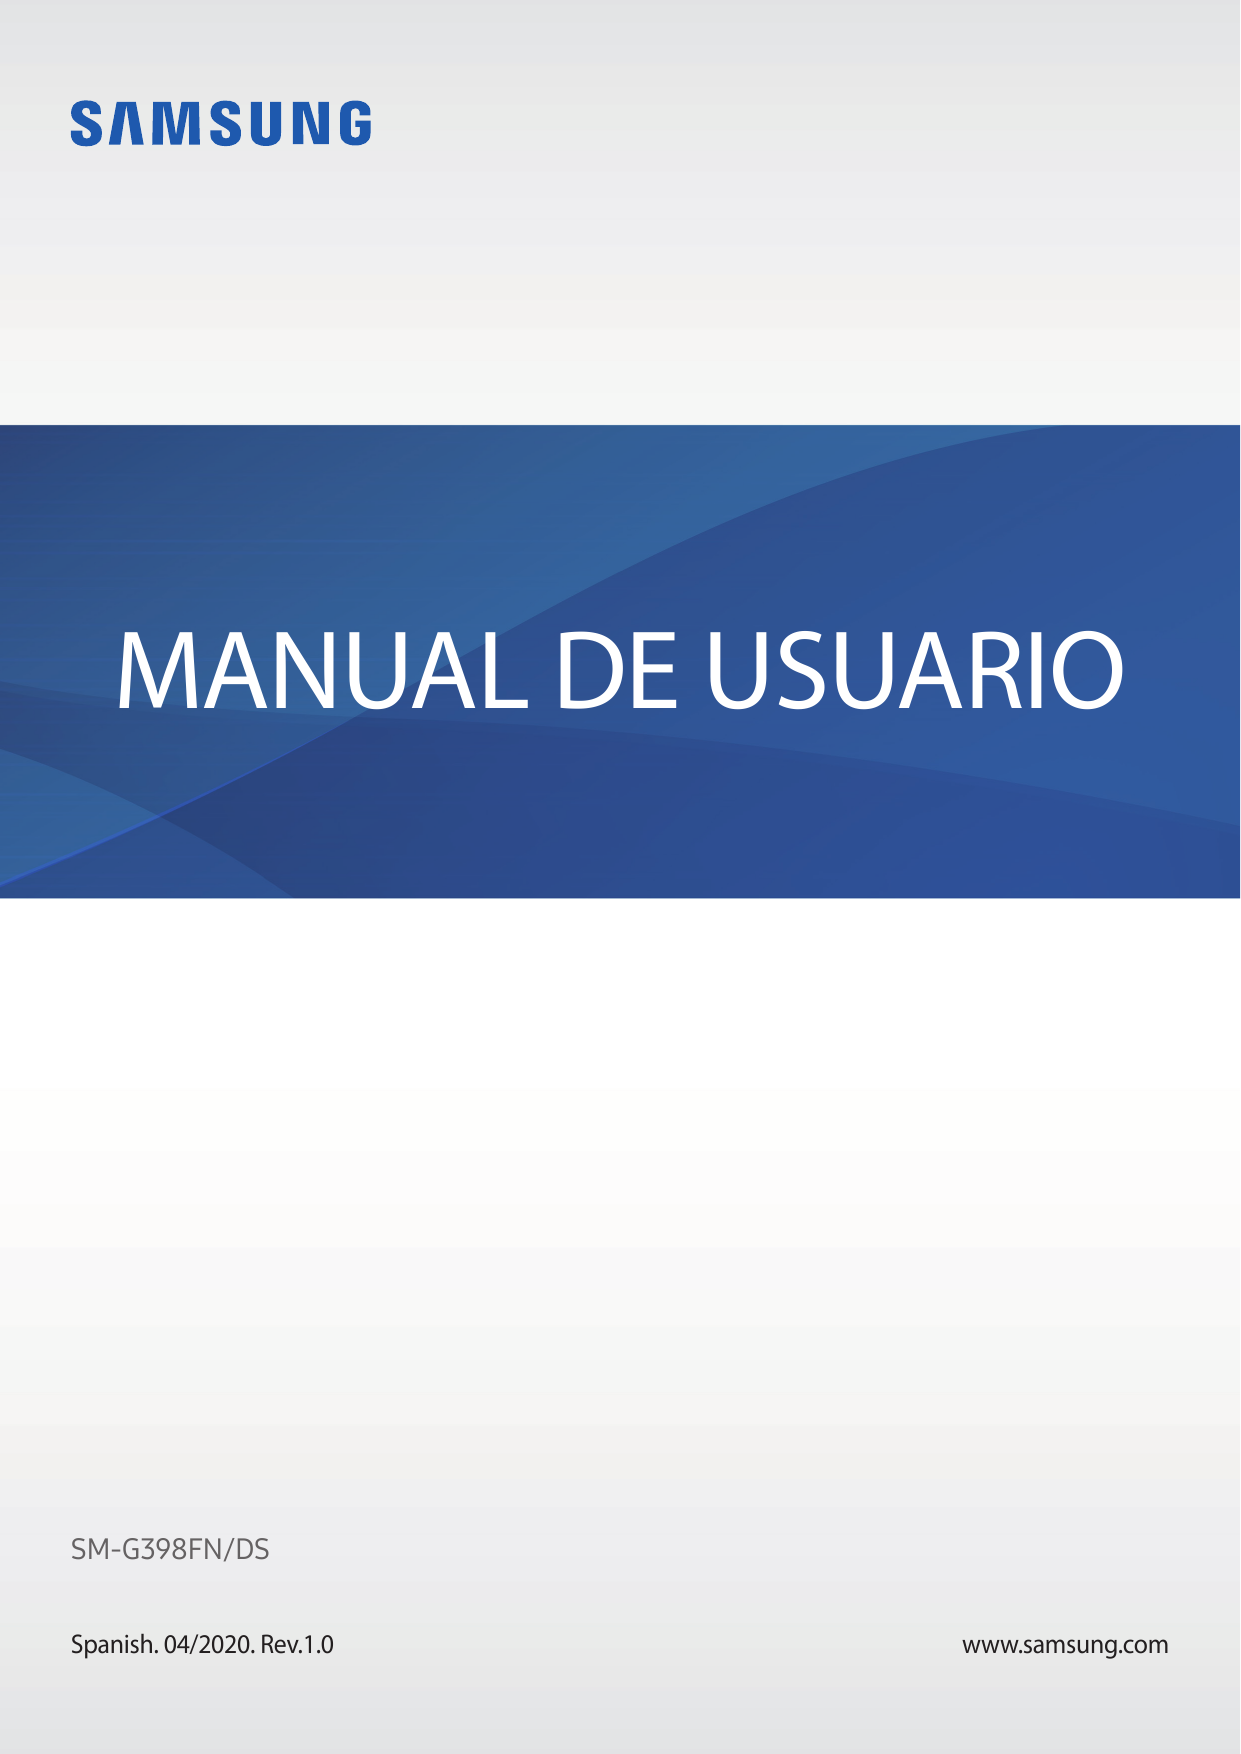 MANUAL DE USUARIOSM-G398FN/DSSpanish. 04/2020. Rev.1.0www.samsung.com